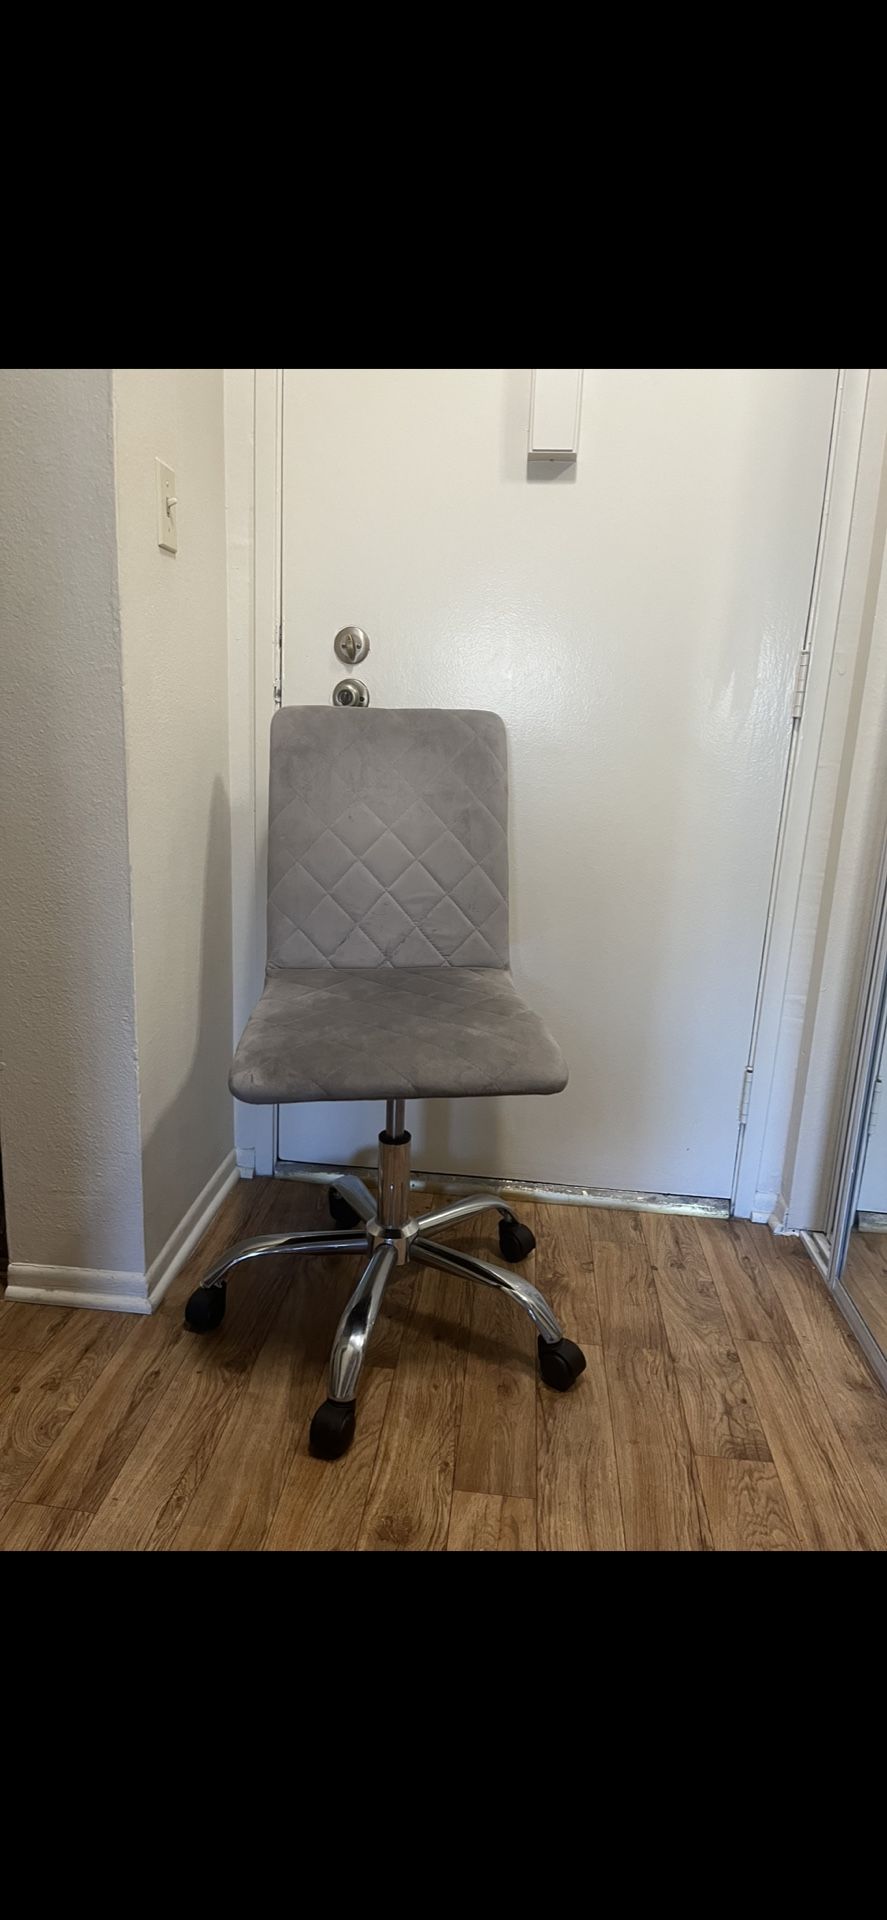 Gray Desk Chair